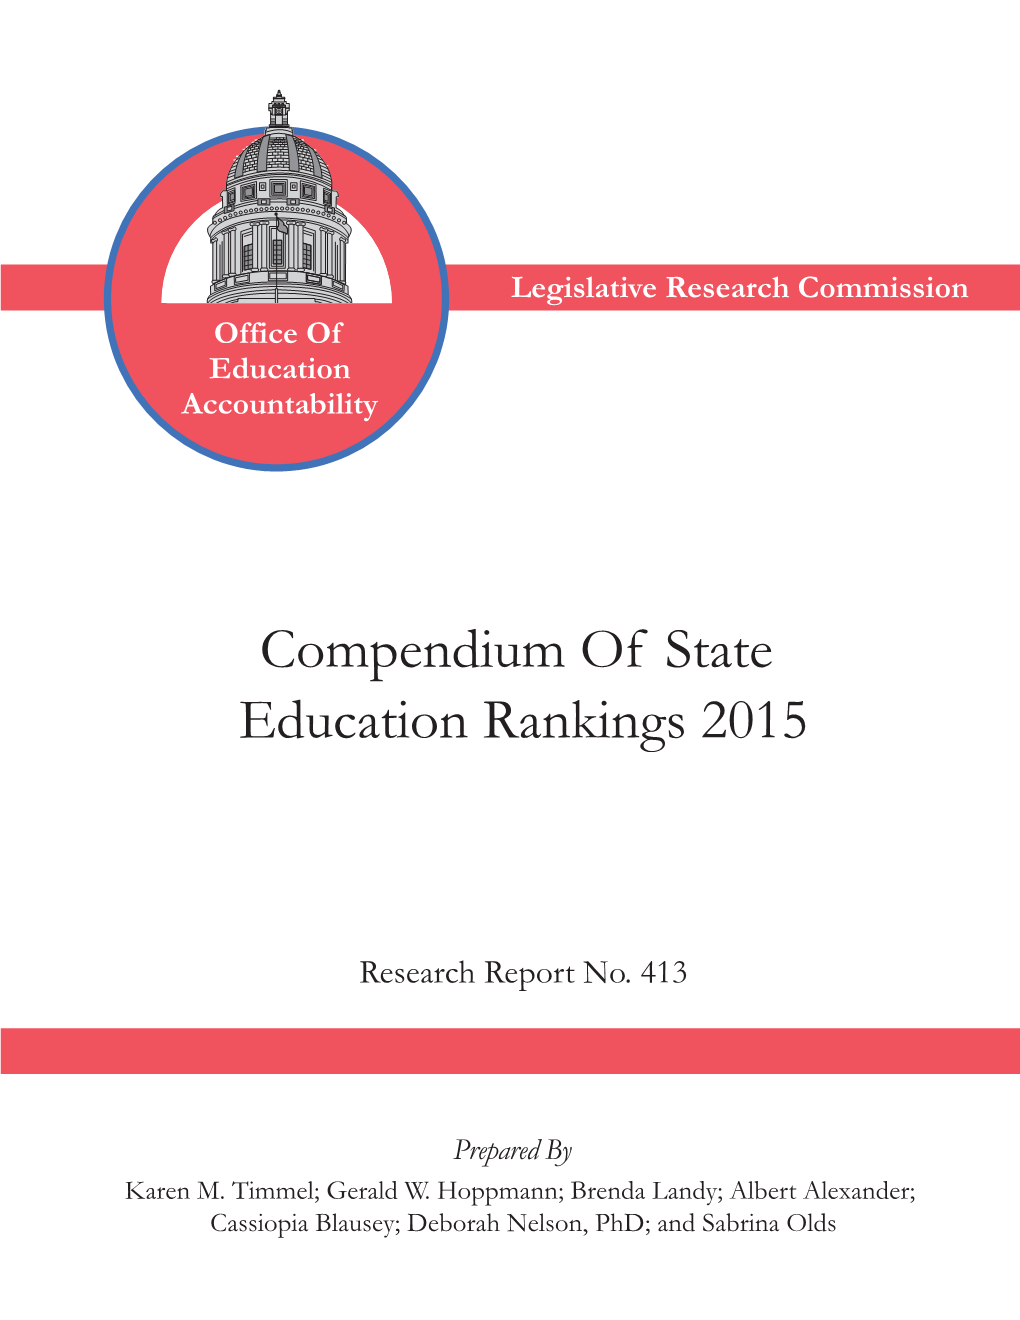 Compendium of State Education Rankings 2015